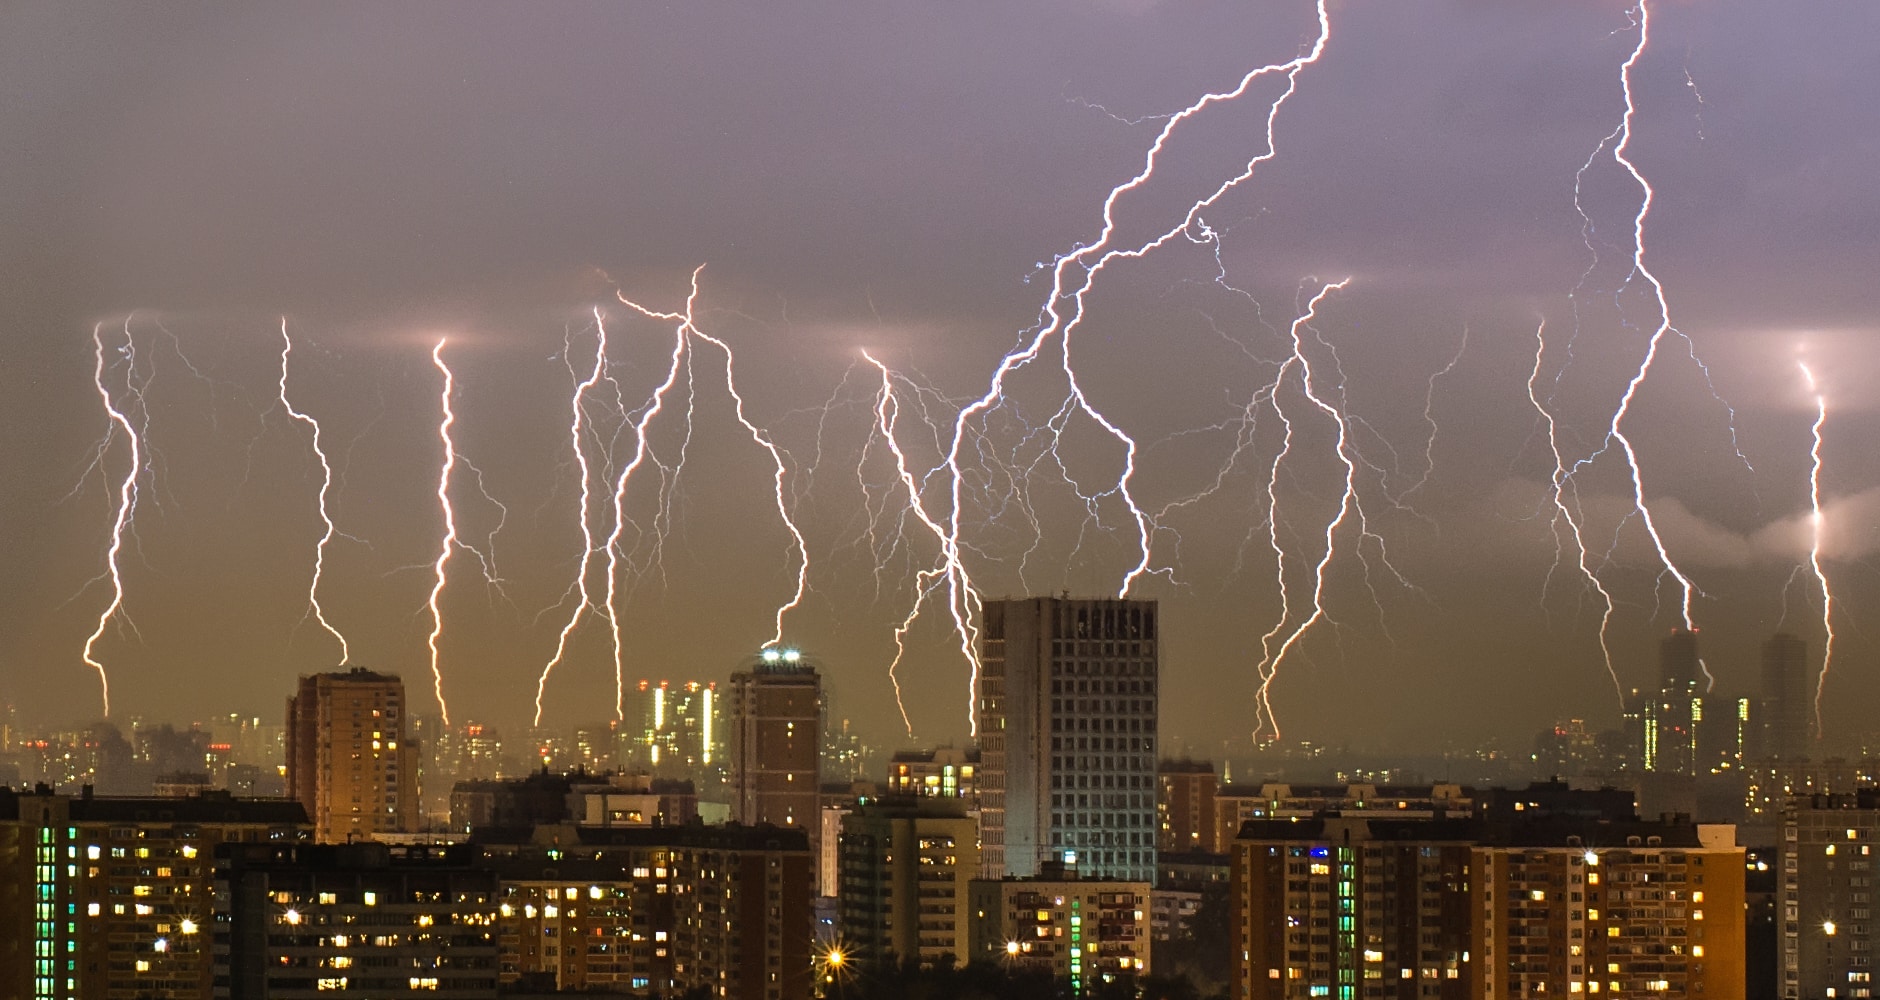 lightning strikes over a cityscape